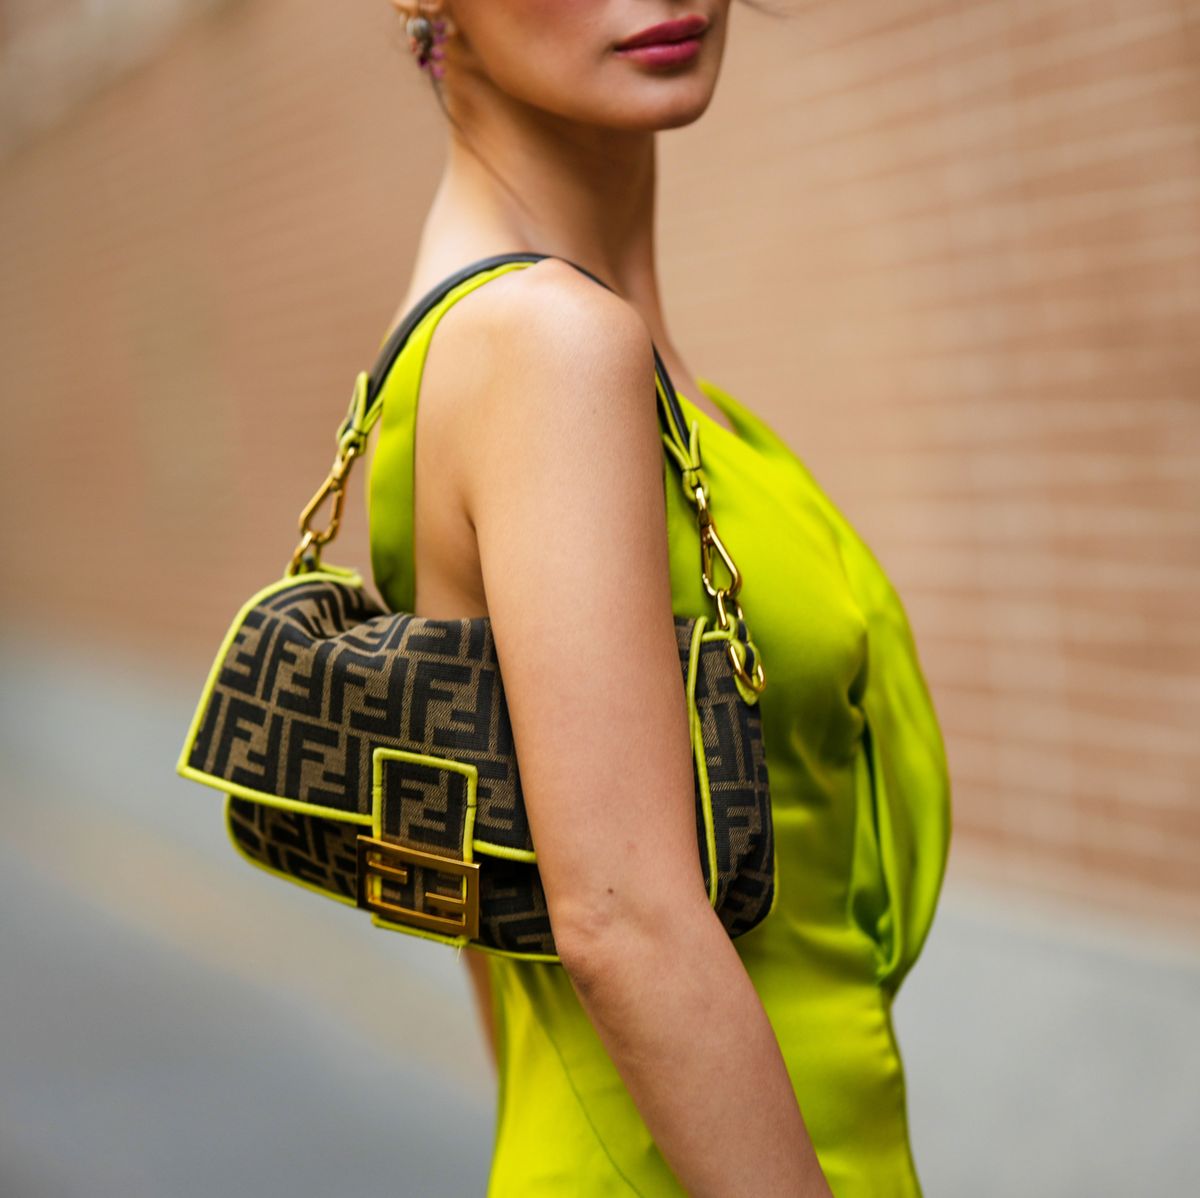 Buy Used Luxury Handbags, Resale Designer Purses